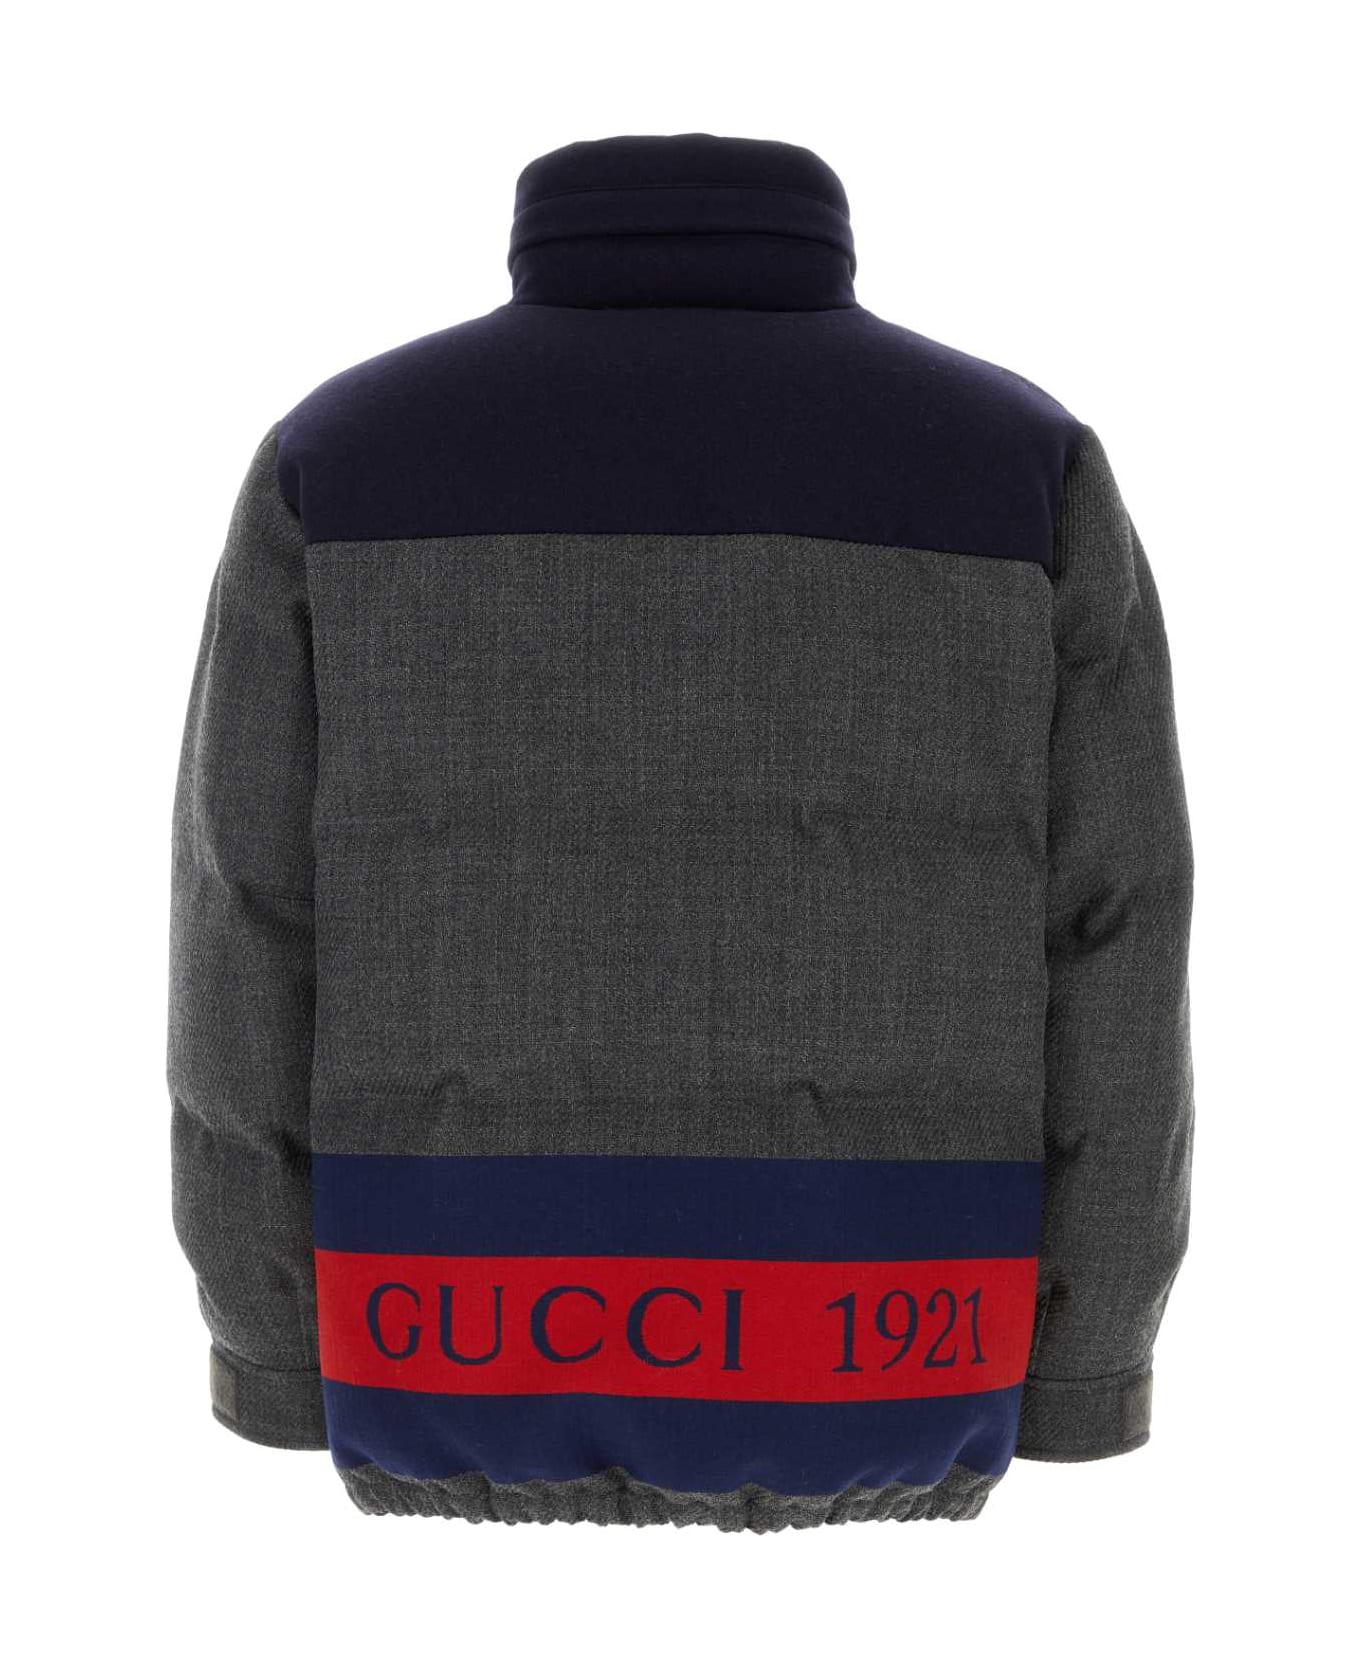 Gucci Dark Grey Wool Blend Down Jacket - GREYBLUEREDMIX